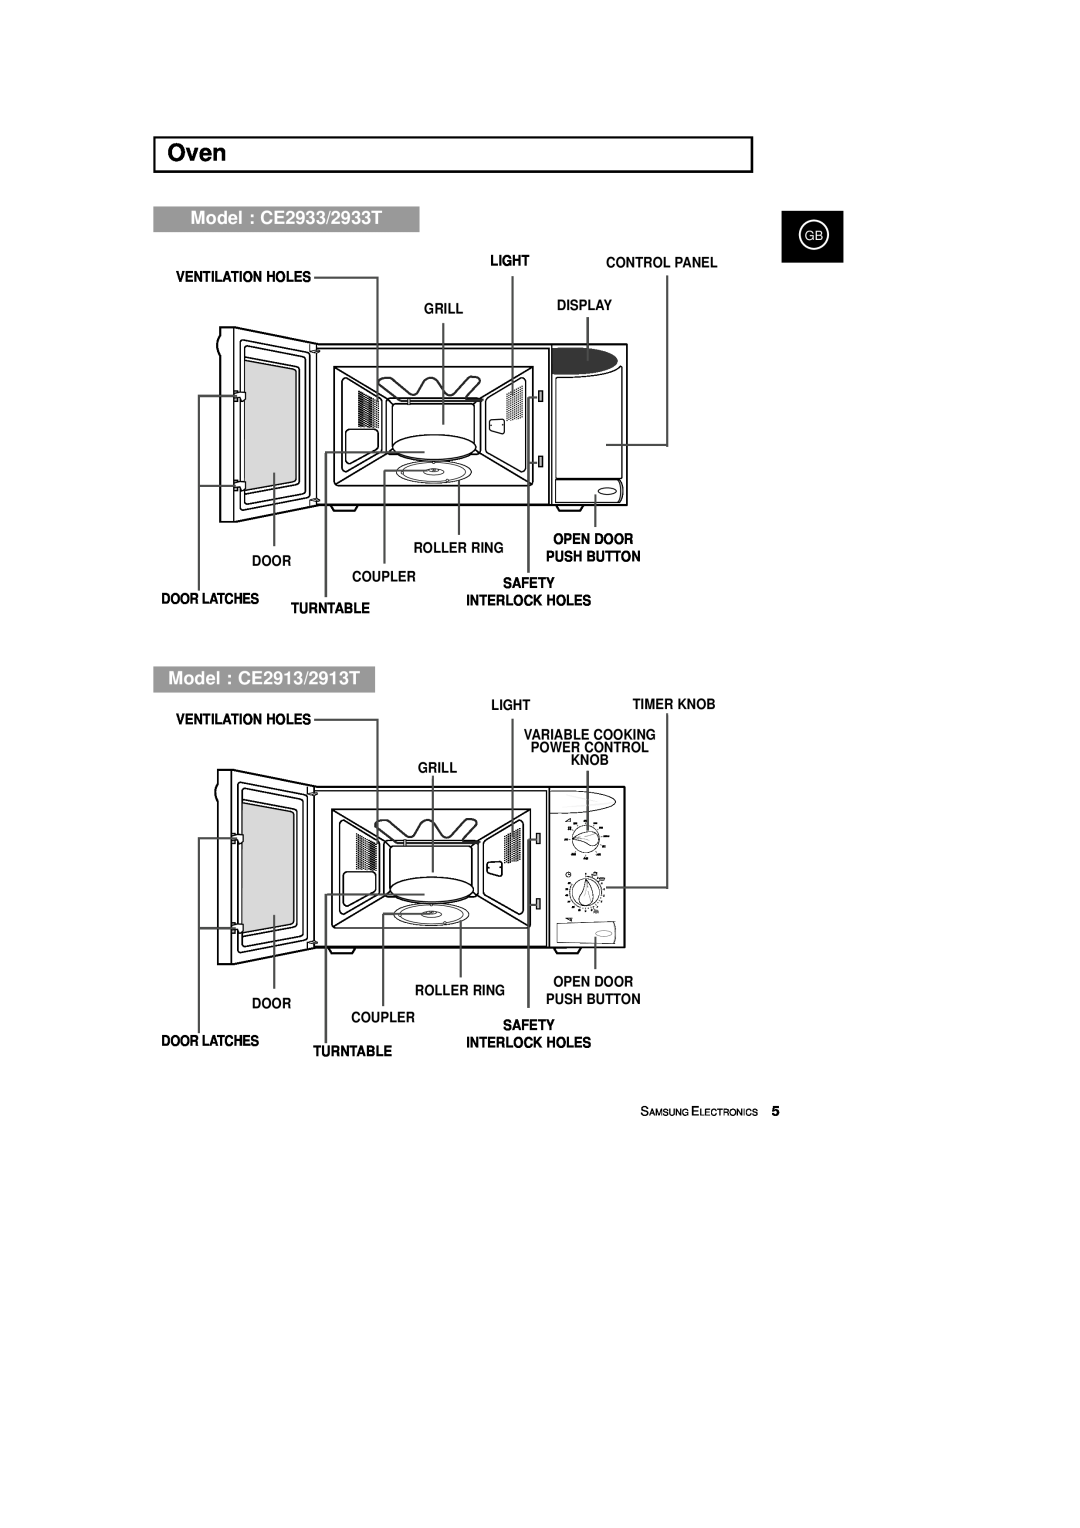 Samsung Oven, Model CE2933/2933T, Model CE2913/2913T, Light, Ventilation Holes, Display, Roller Ring, Door, Coupler 